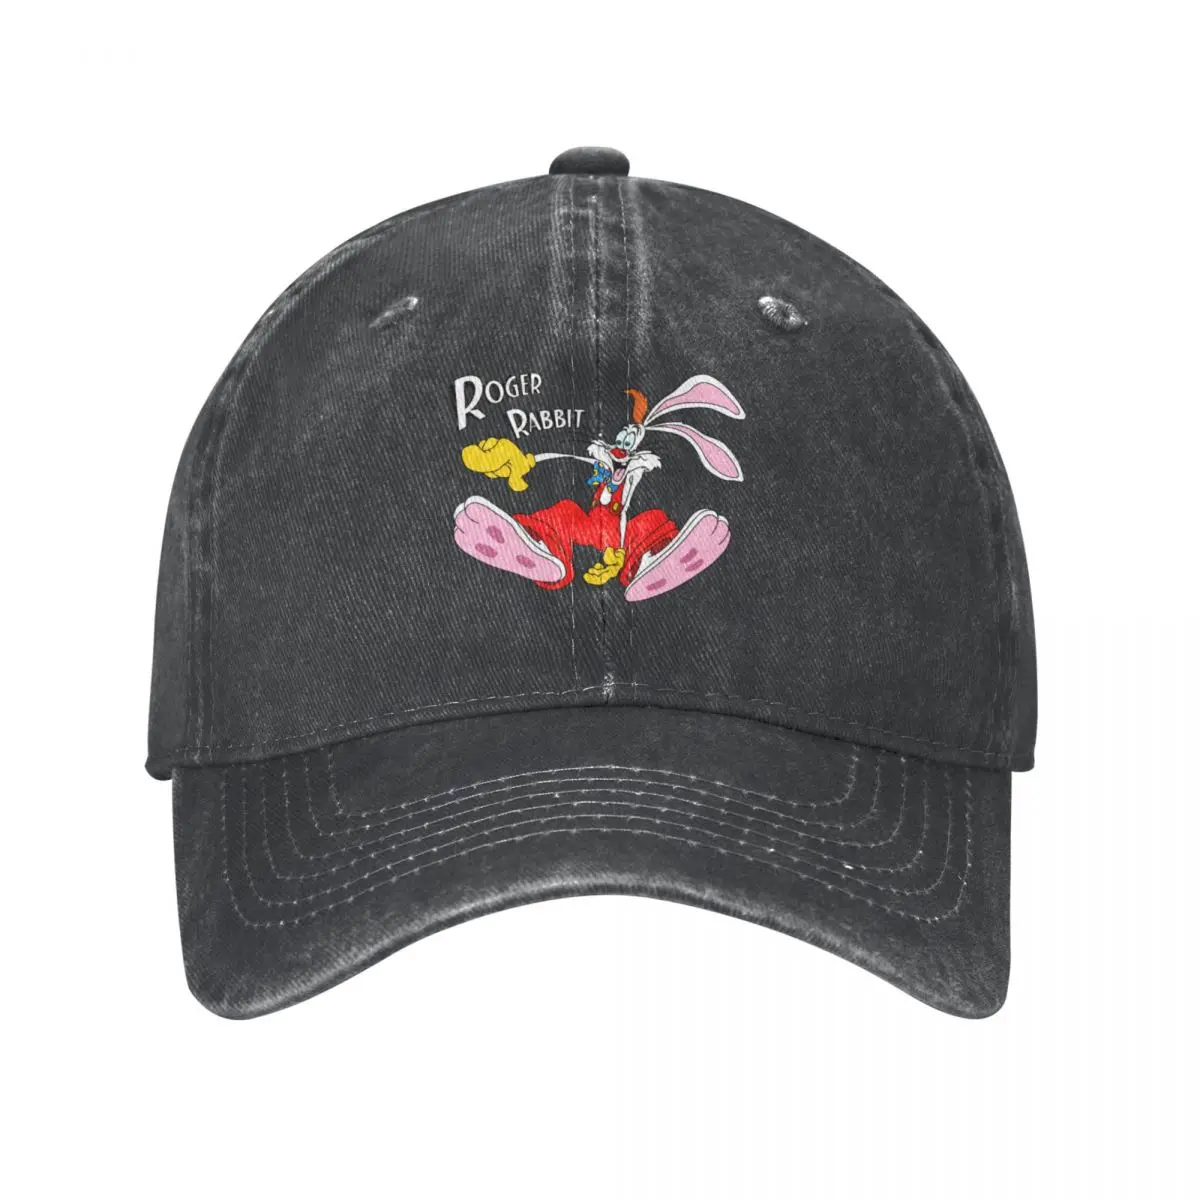 Roger Rabbit IV Cowboy Hat Military Tactical Cap black Luxury Brand Snapback Cap Baseball For Men Women's